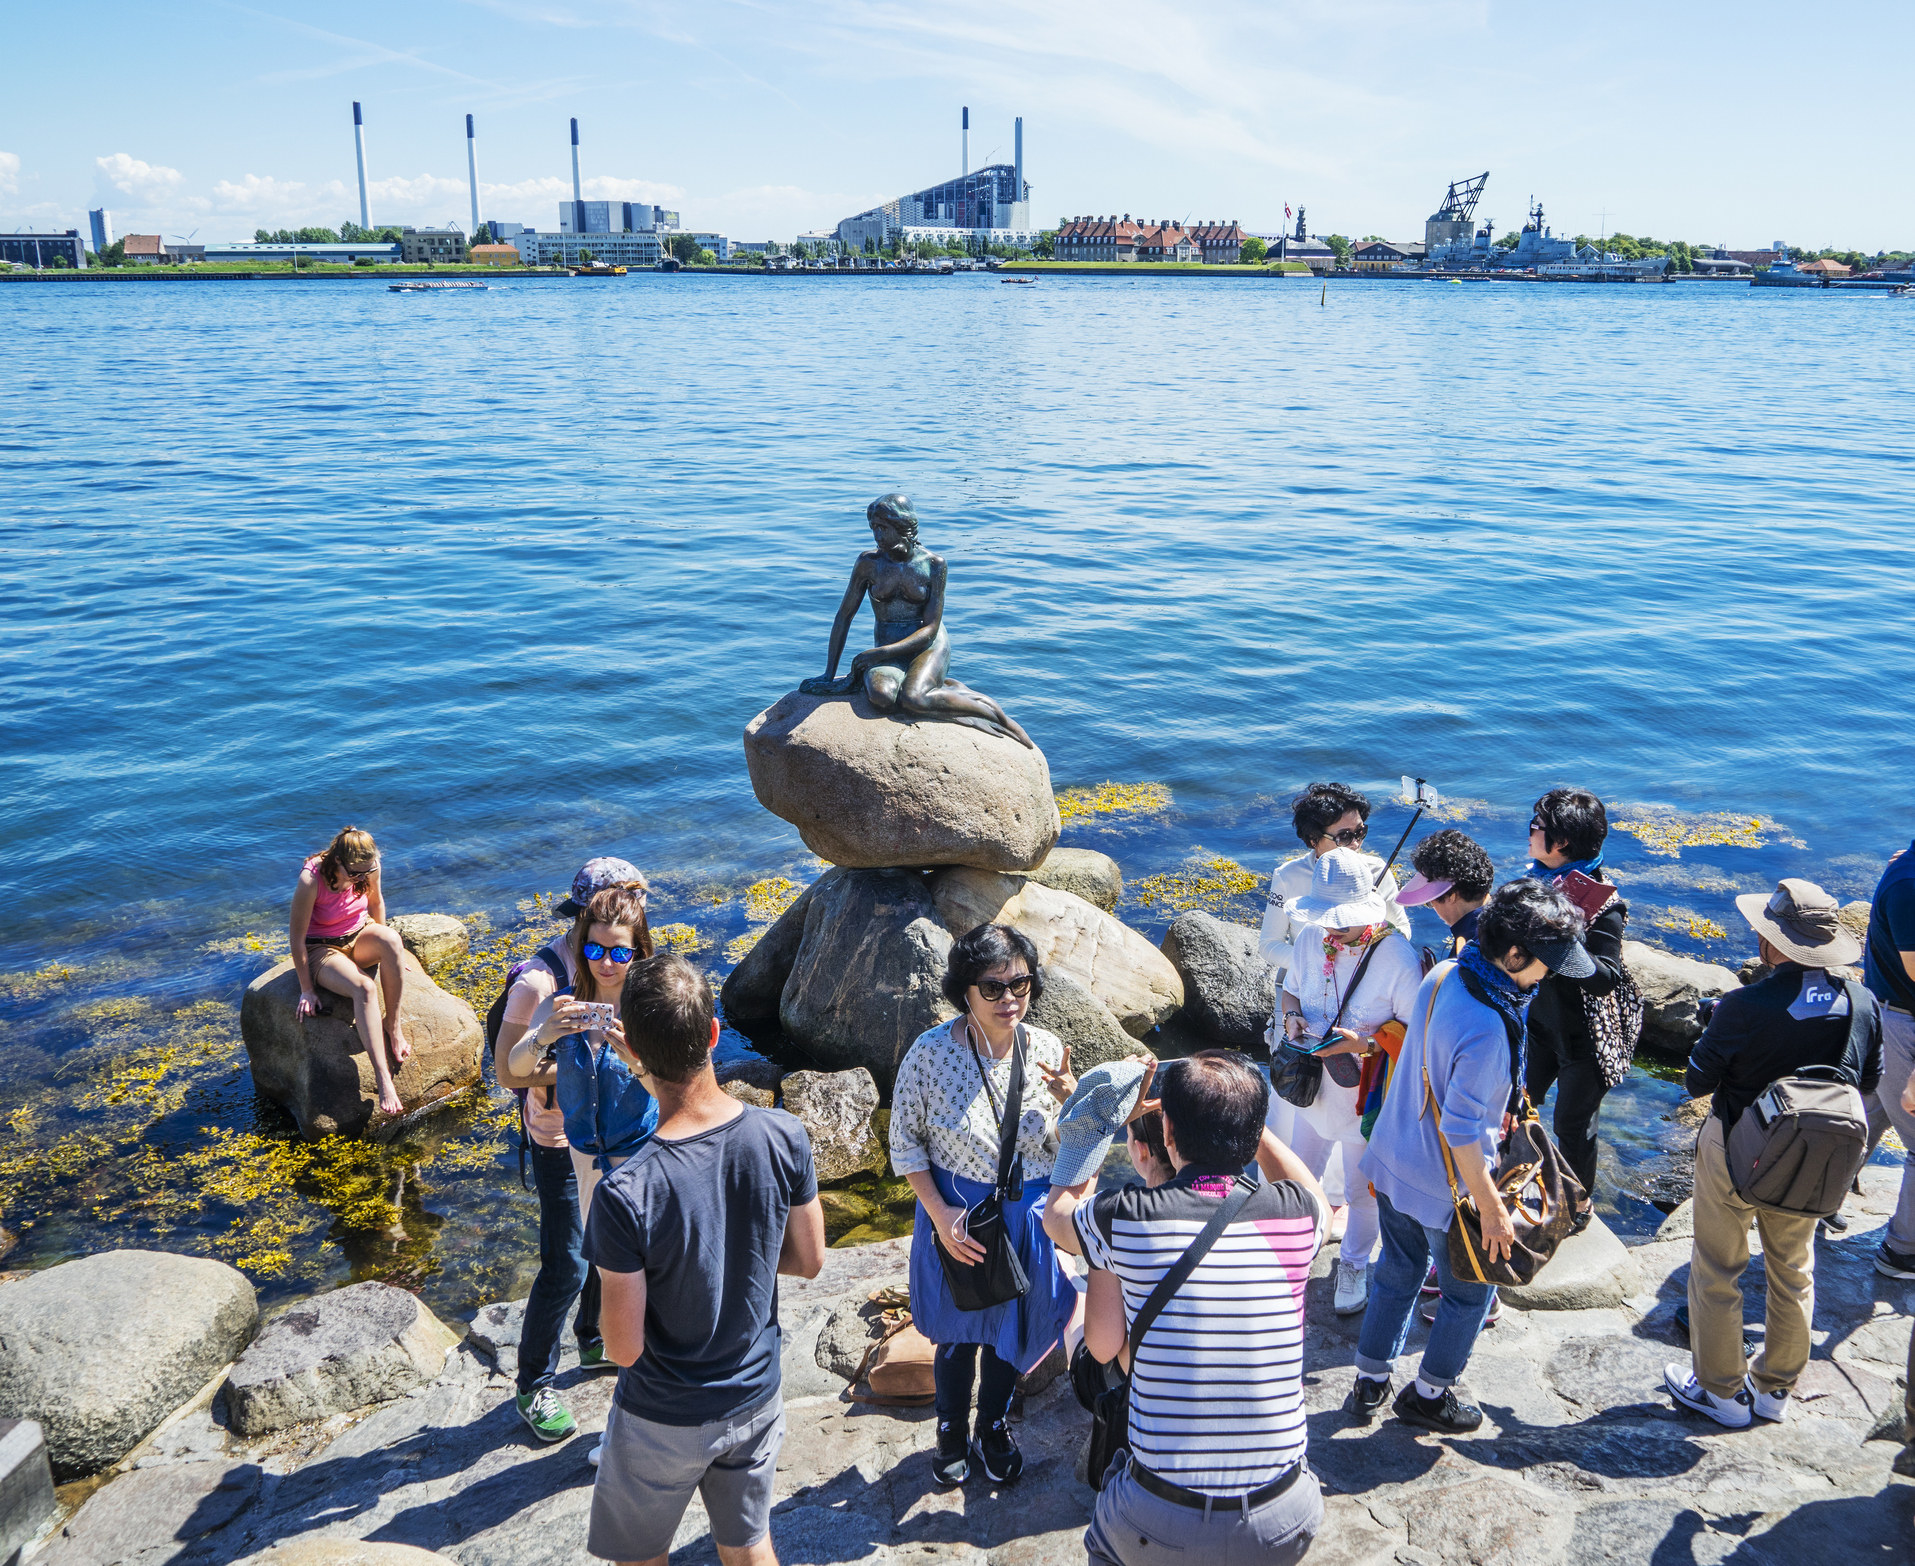 Tourists gathering around the Little Mermaid statue in Copenhagen